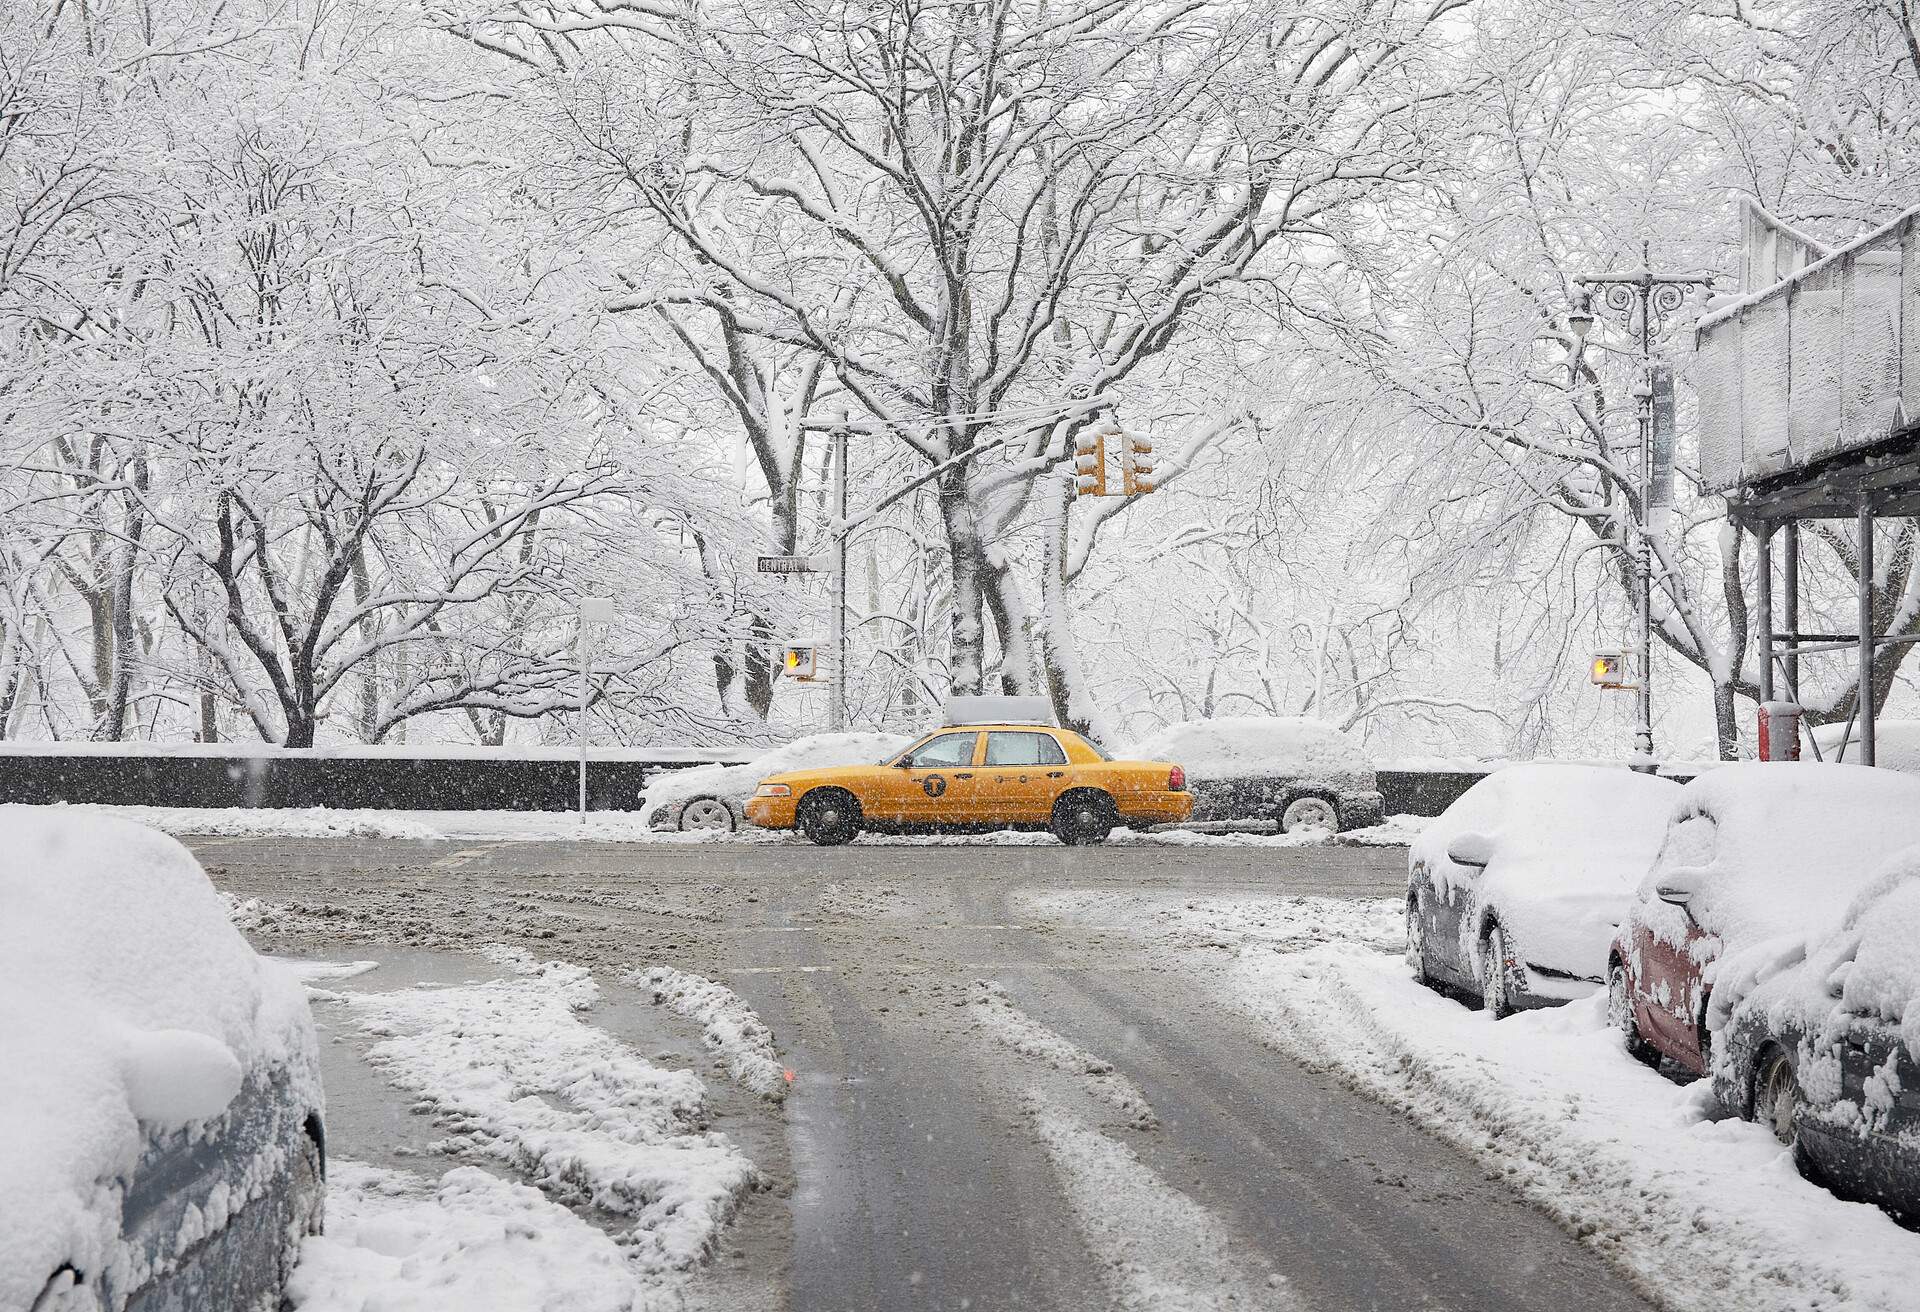 USA_AMERICA_NEW_YORK_SNOW_WINTER_TAXI